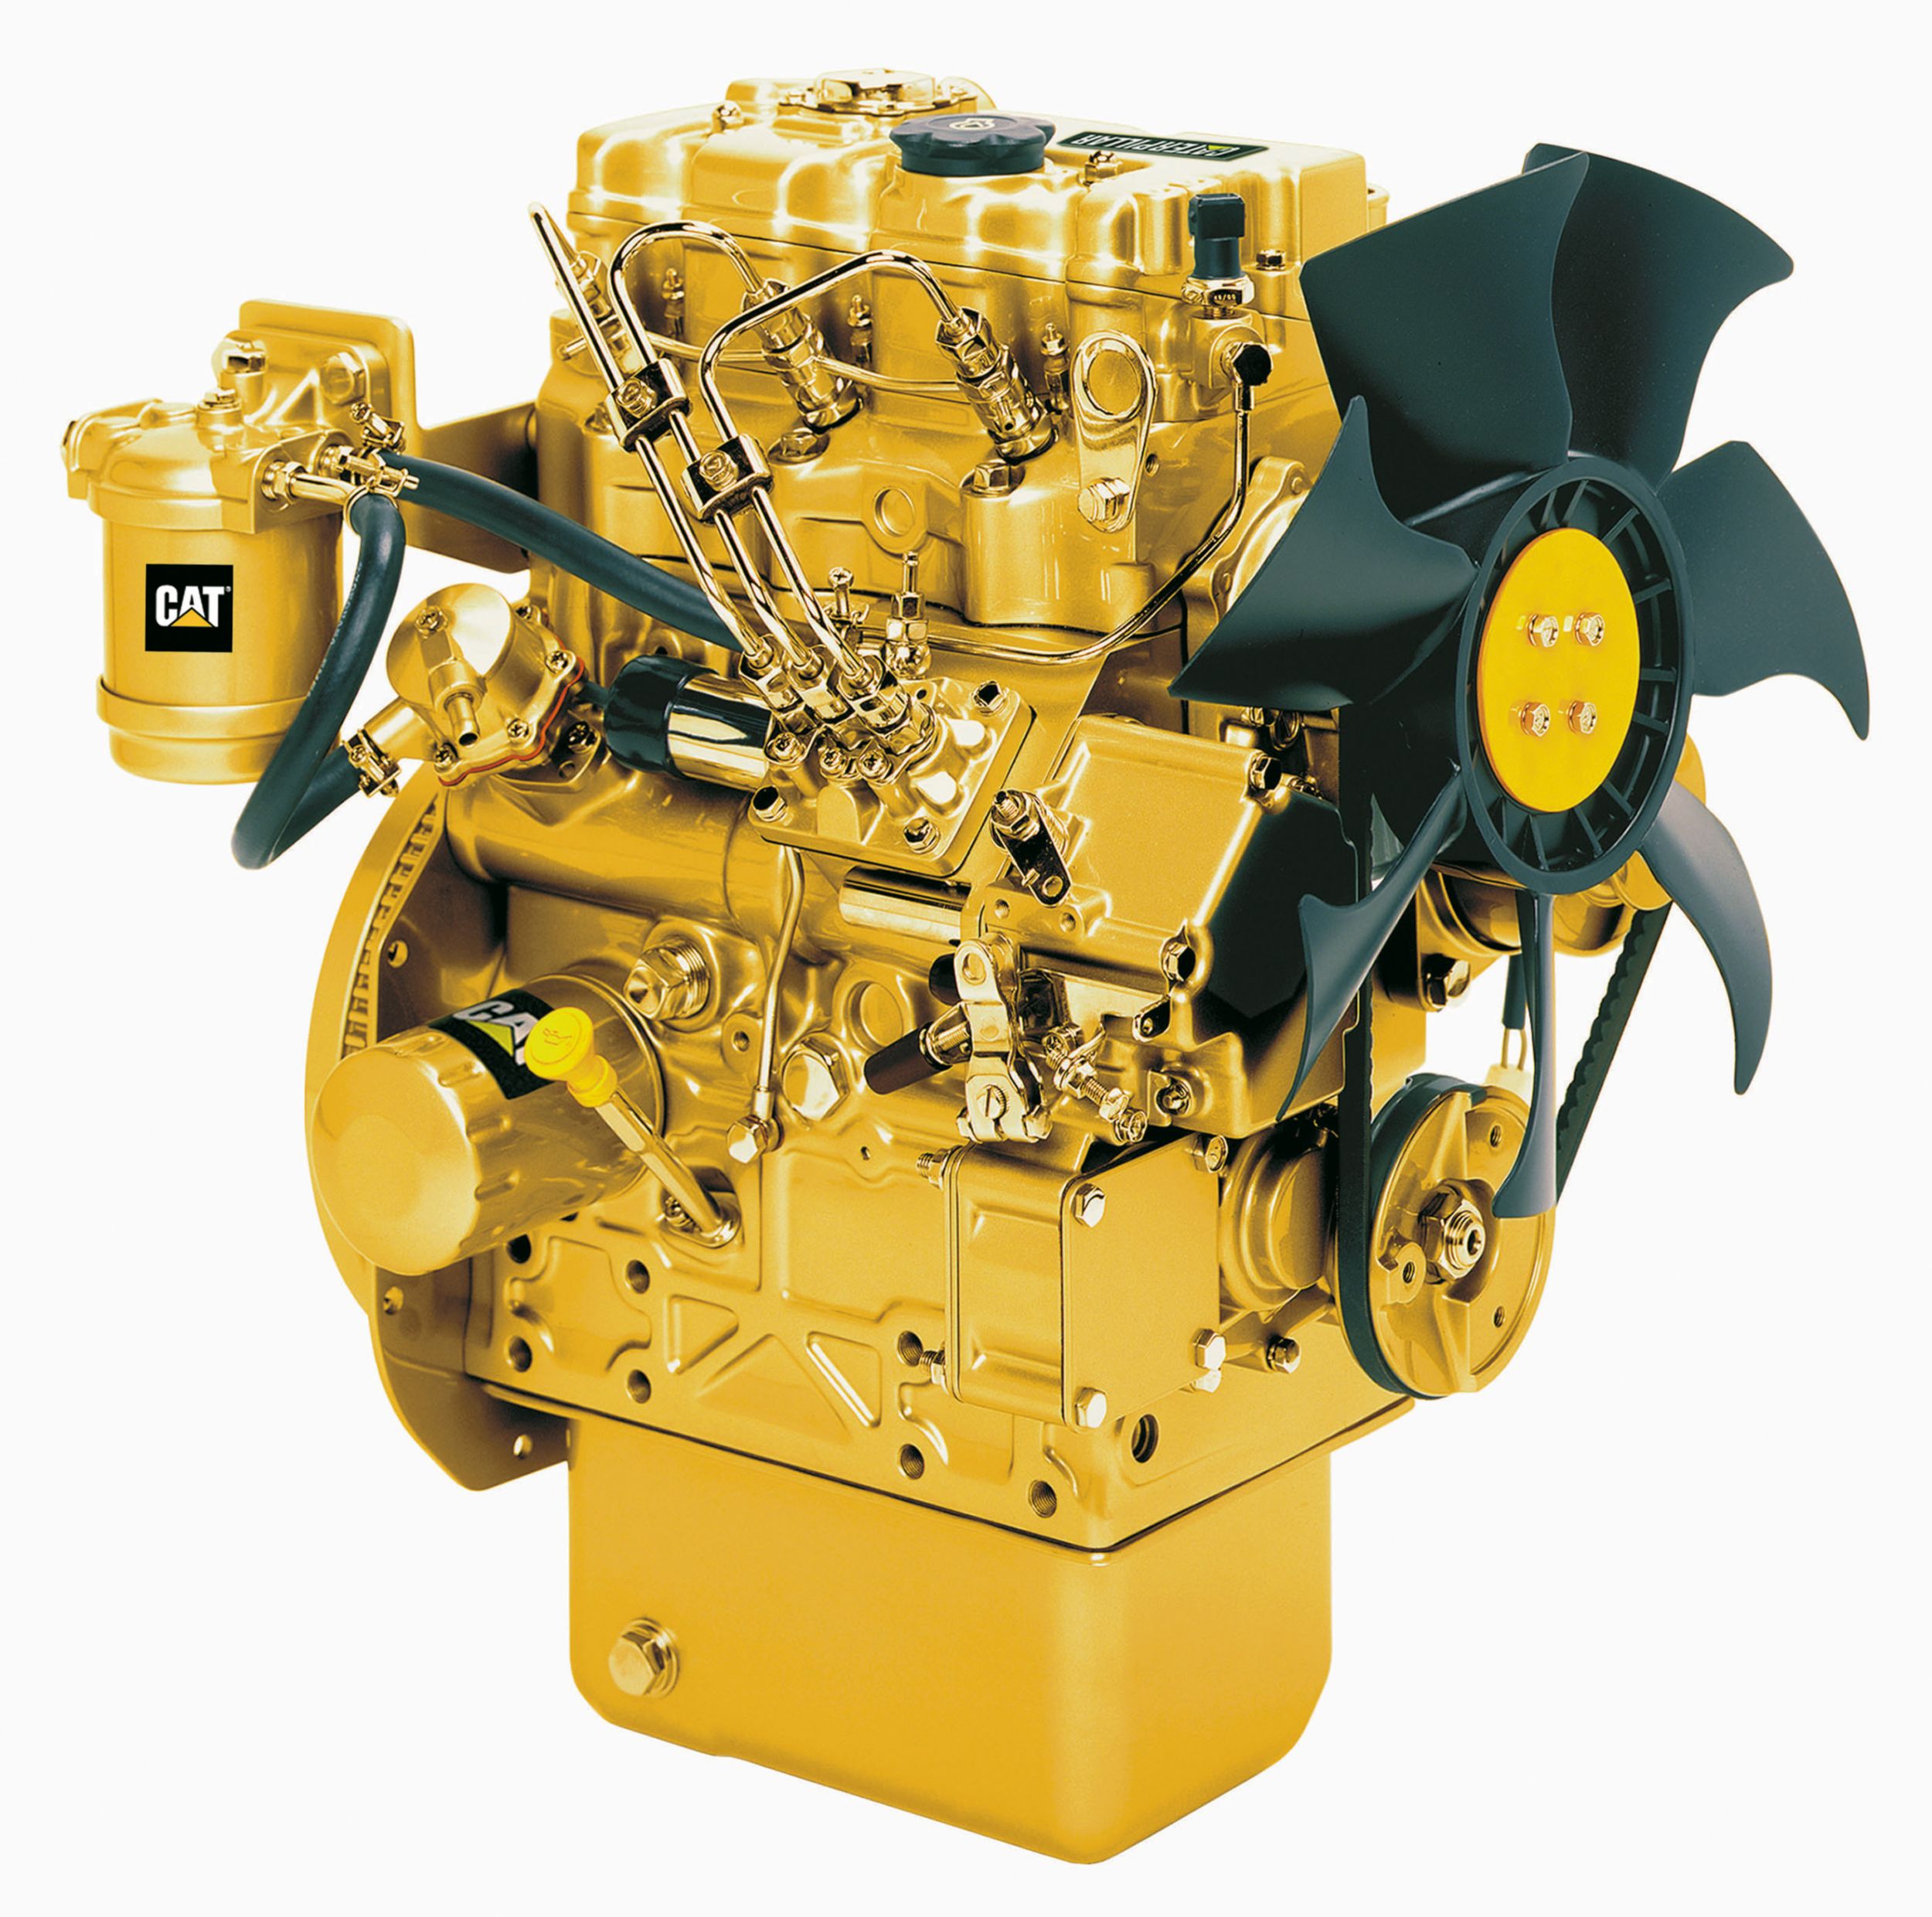 C1.1 LRC 디젤 엔진 - 규제가 약하거나 비규제 지역에서 사용